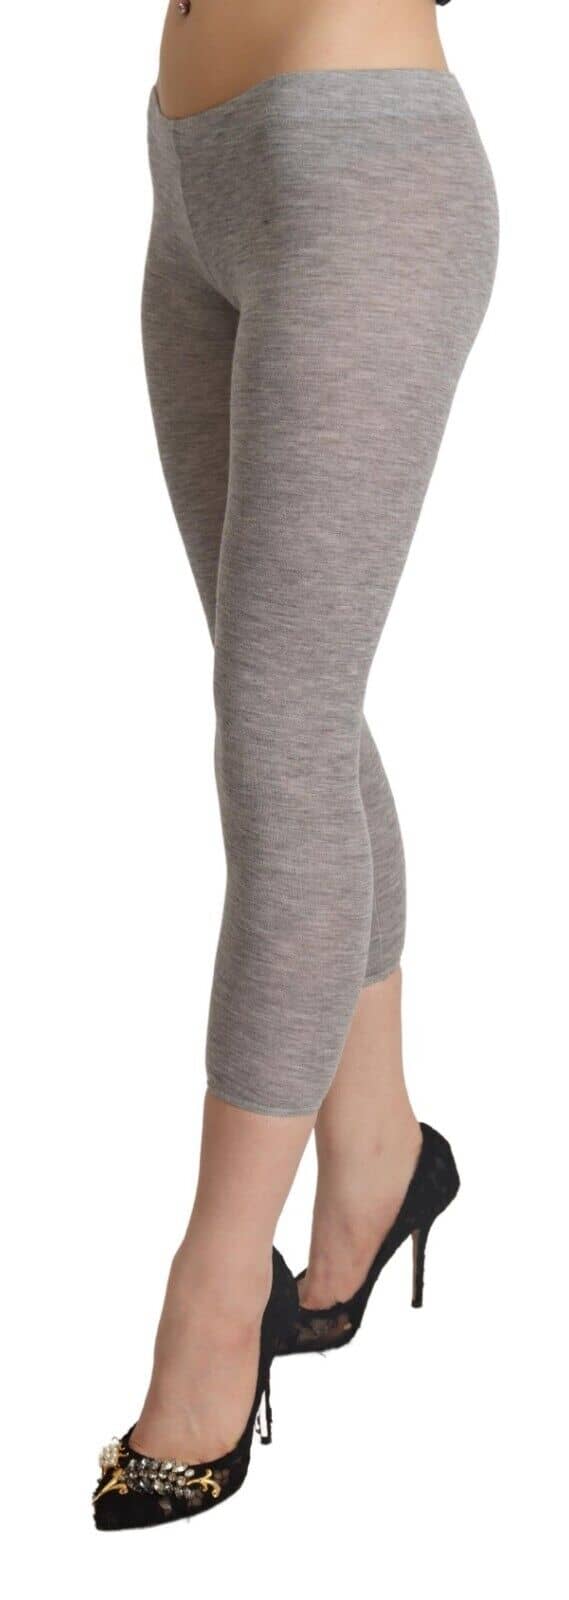 Gray modal low waist cropped leggings slim pants